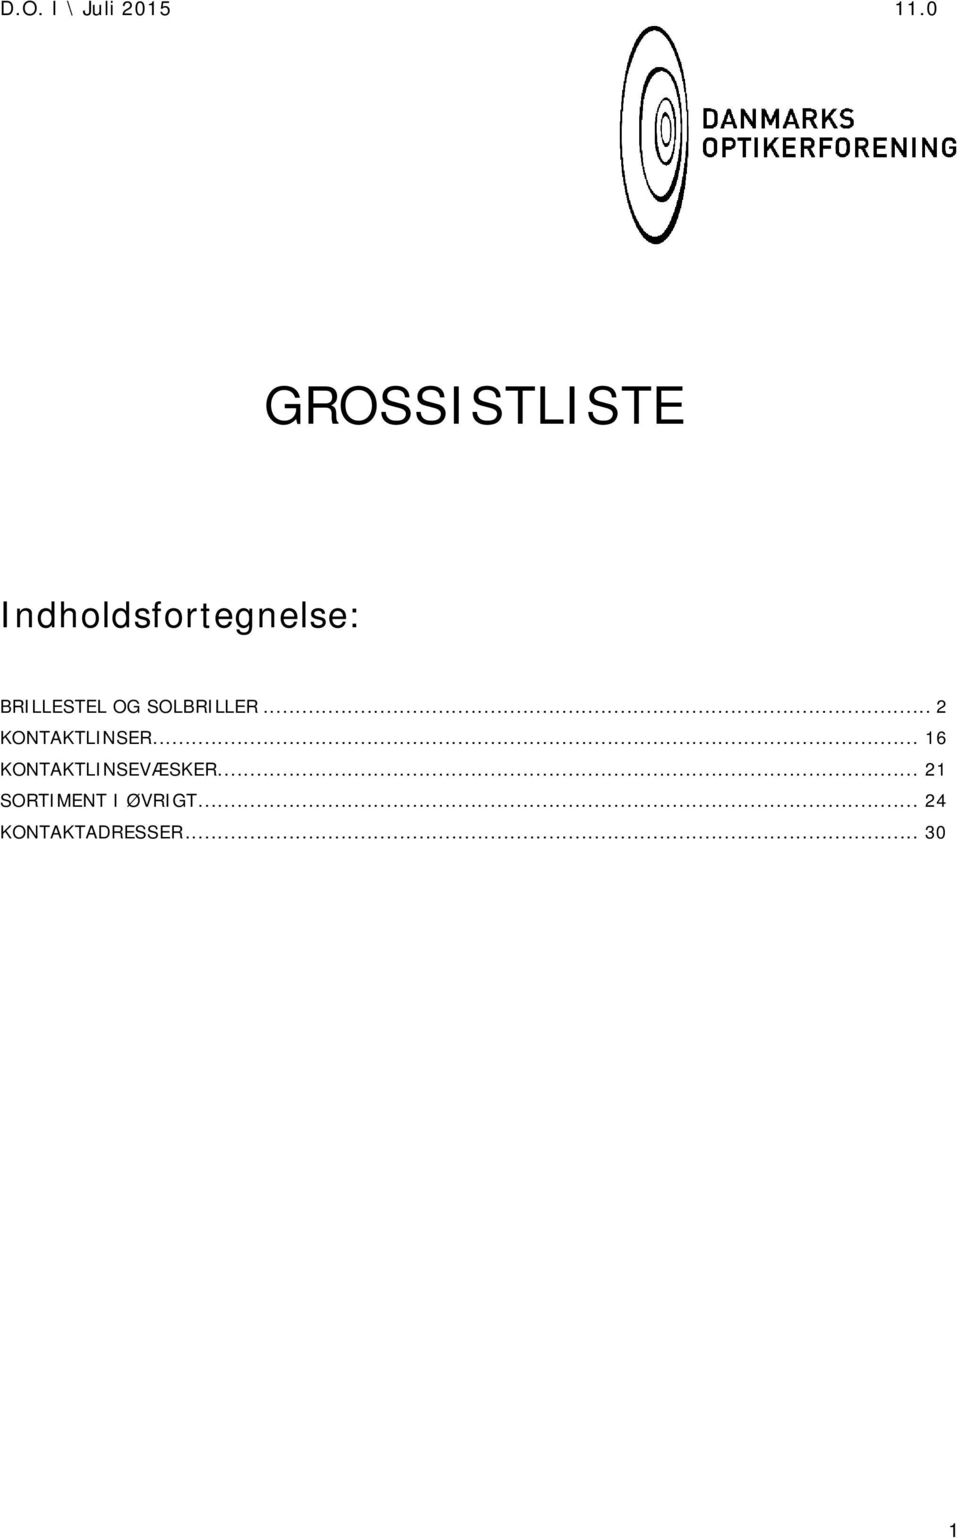 D.O. I \ Juli GROSSISTLISTE - PDF Free Download